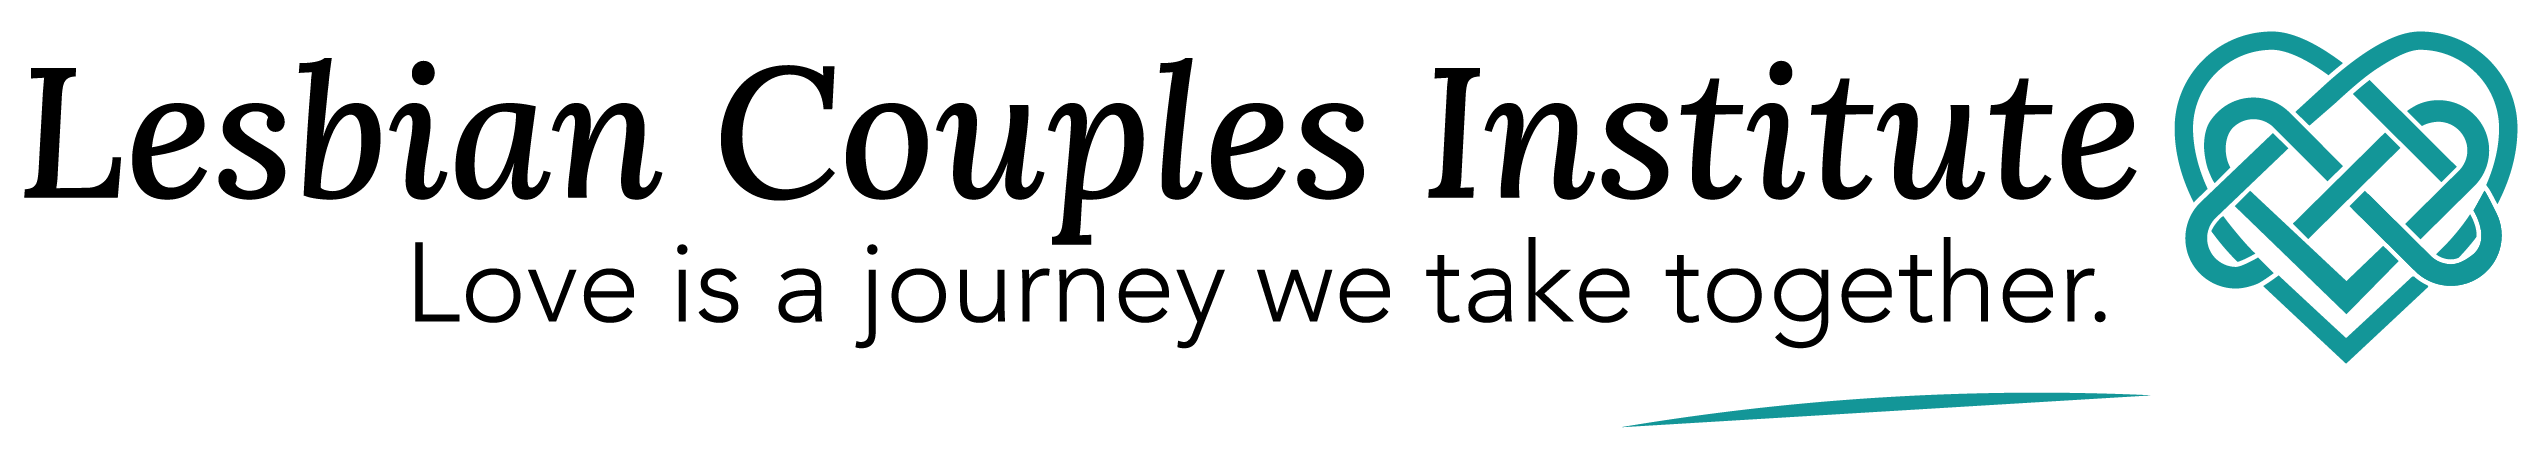 LCI-Wordmark-Logo-Black-01